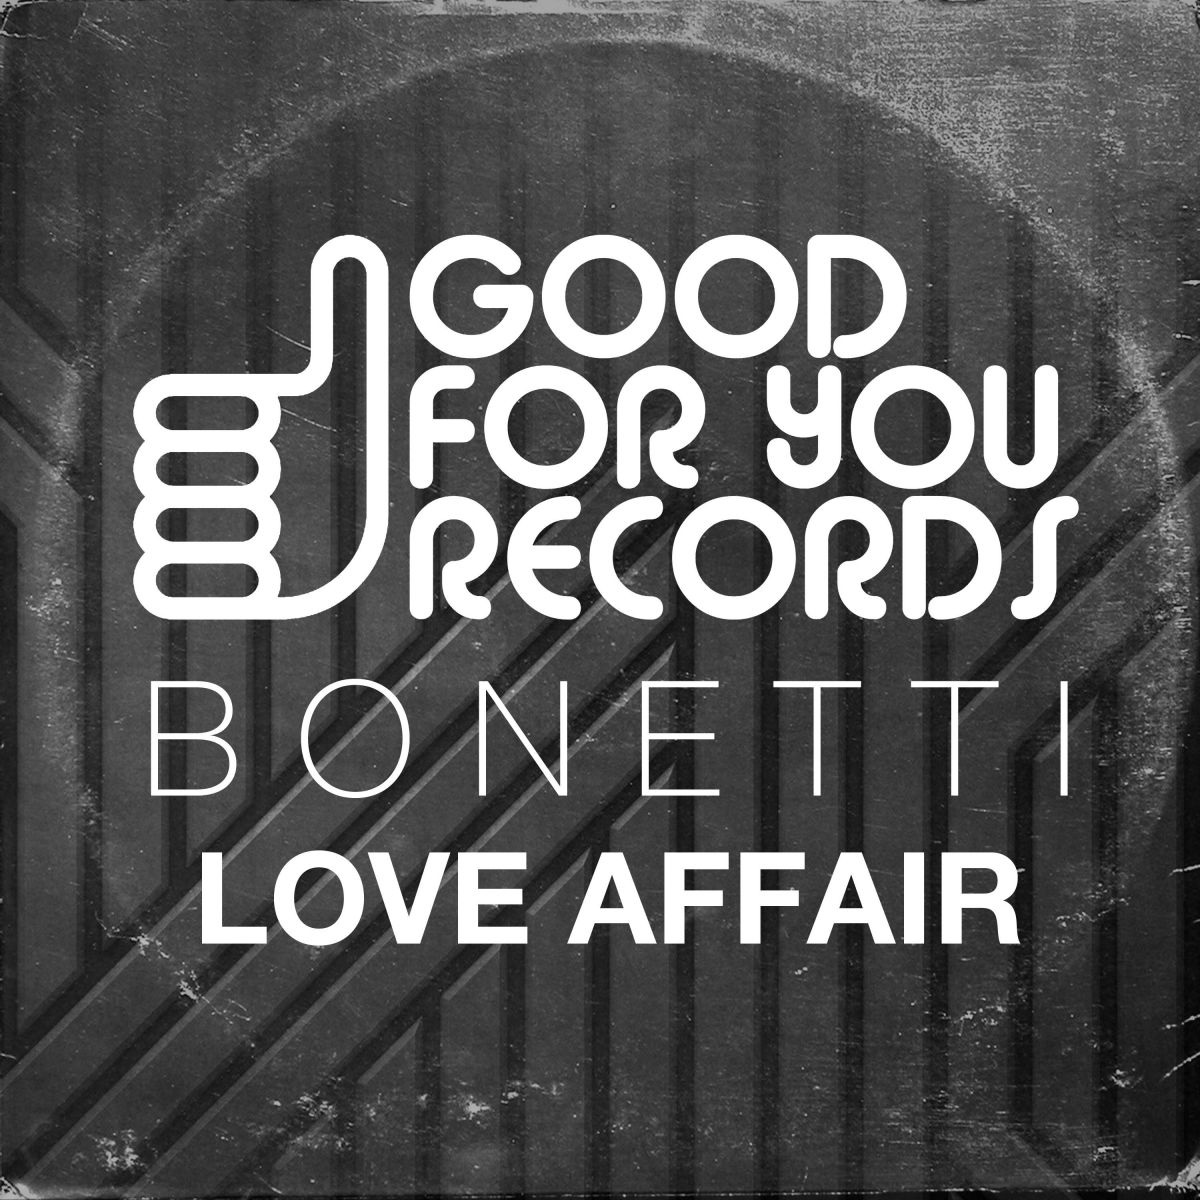 Bonetti - Love Affair / Good For You Records